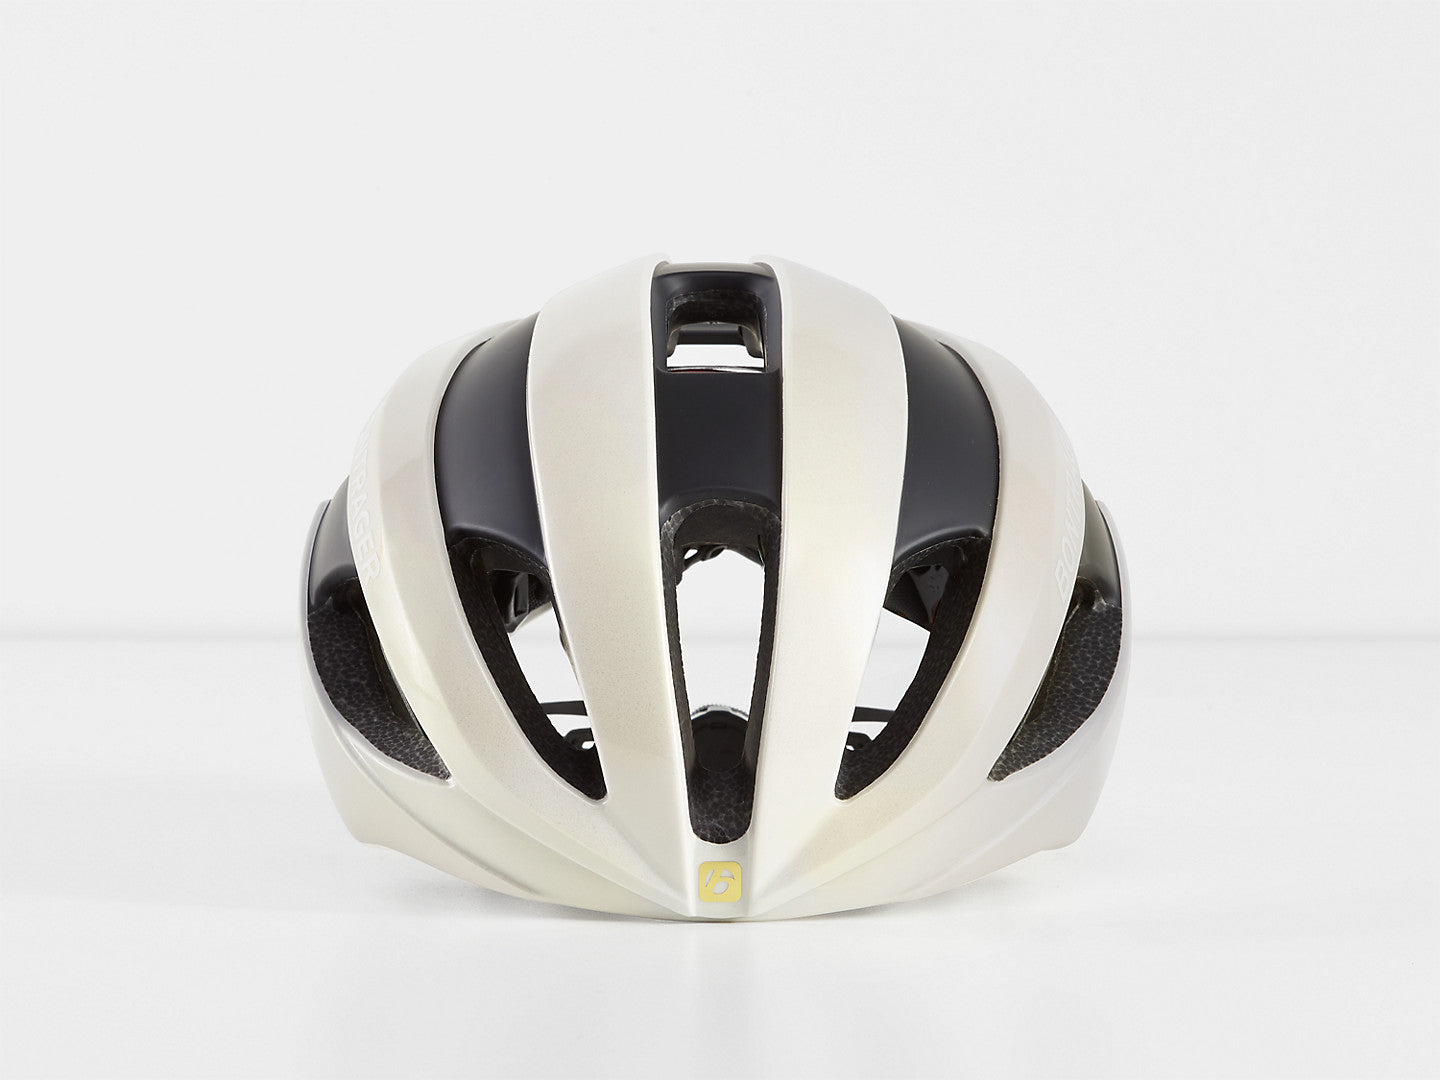 Bontrager Velocis MIPS Asia Fit Road Helmet（ベロシス ミップス